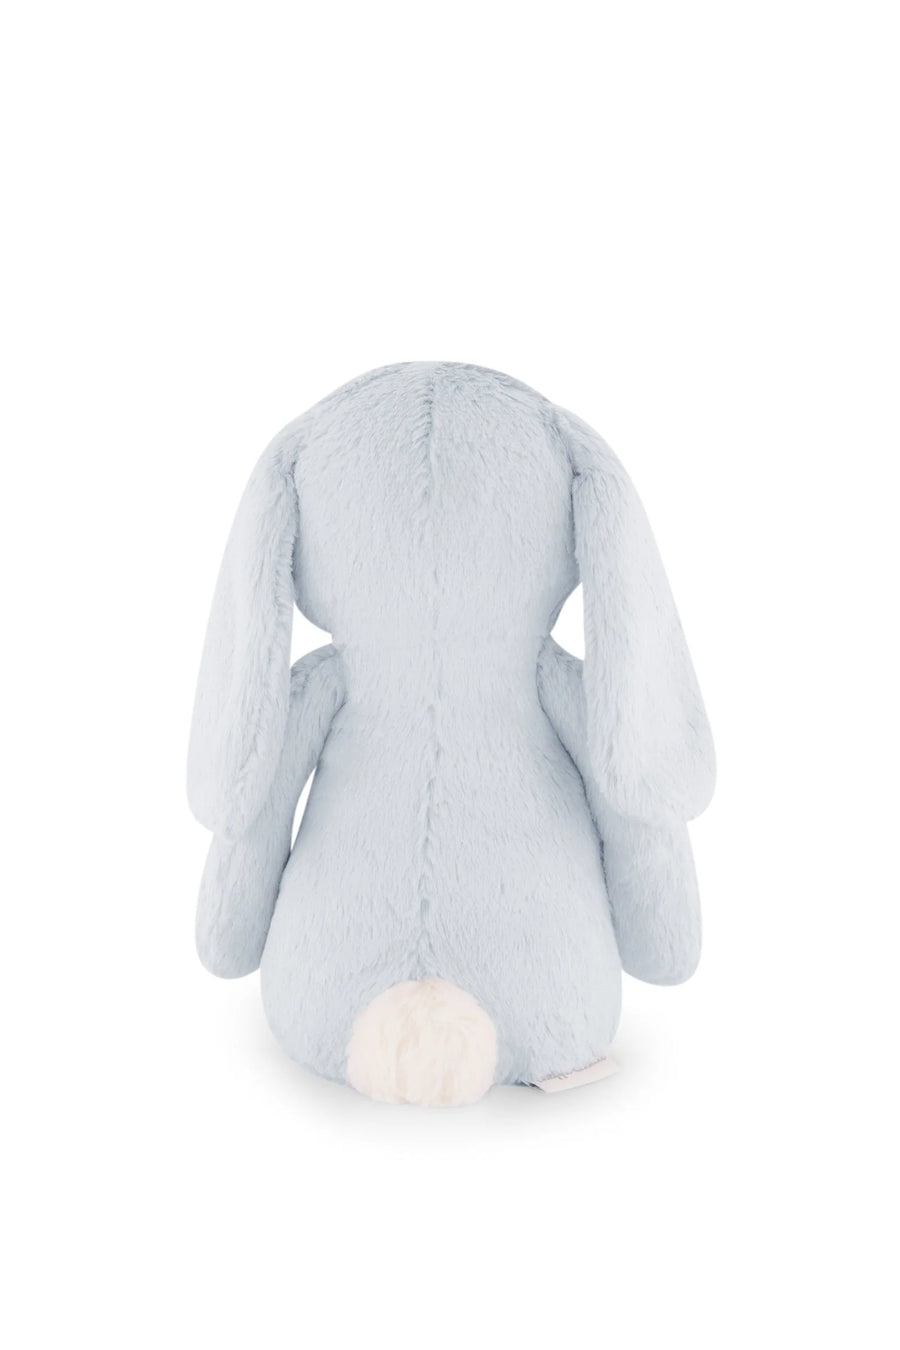 Snuggle Bunny - Penelope - Droplet - 30cm